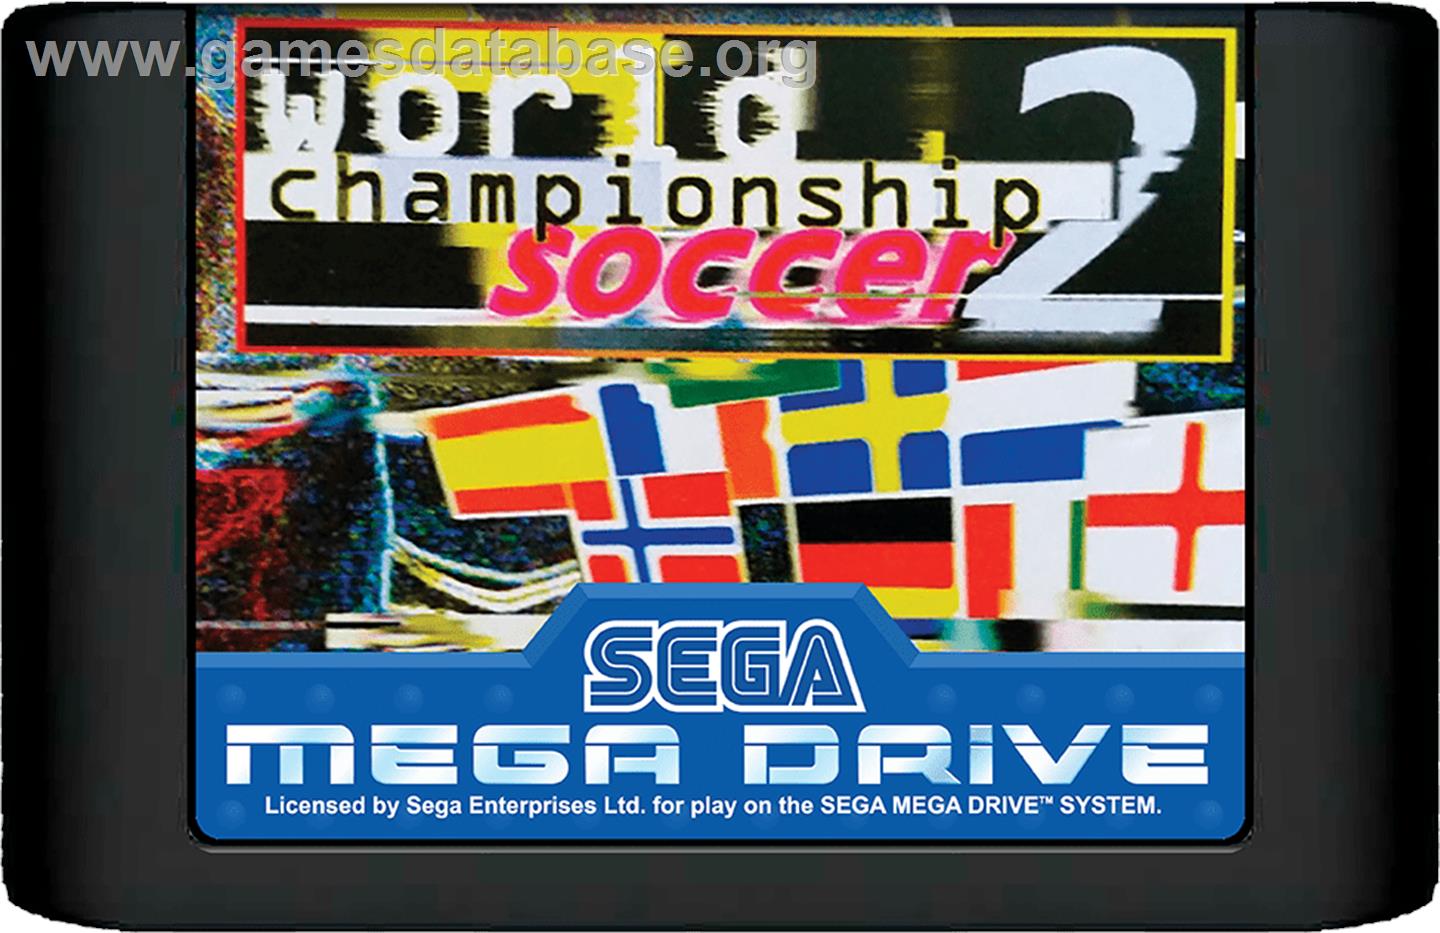 World Championship Soccer 2 - Sega Genesis - Artwork - Cartridge